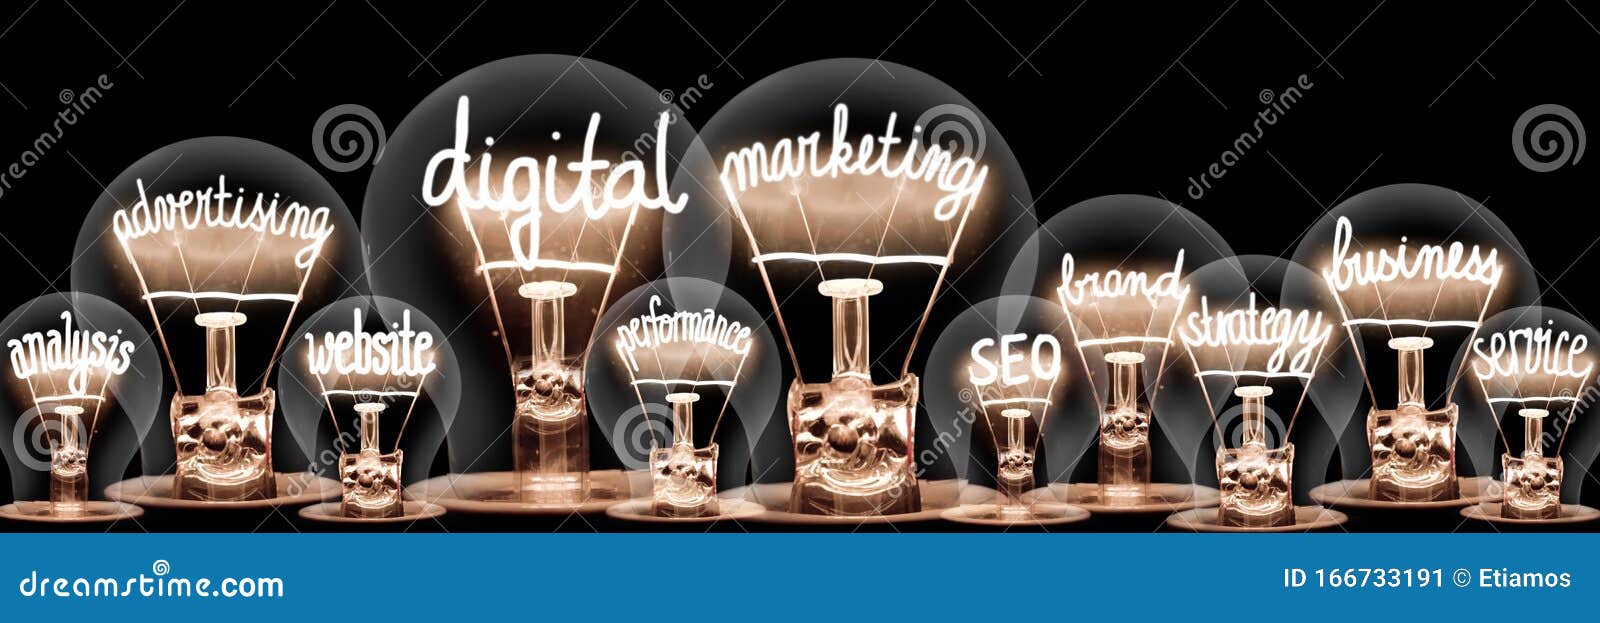 light bulbs with digital marketing concept